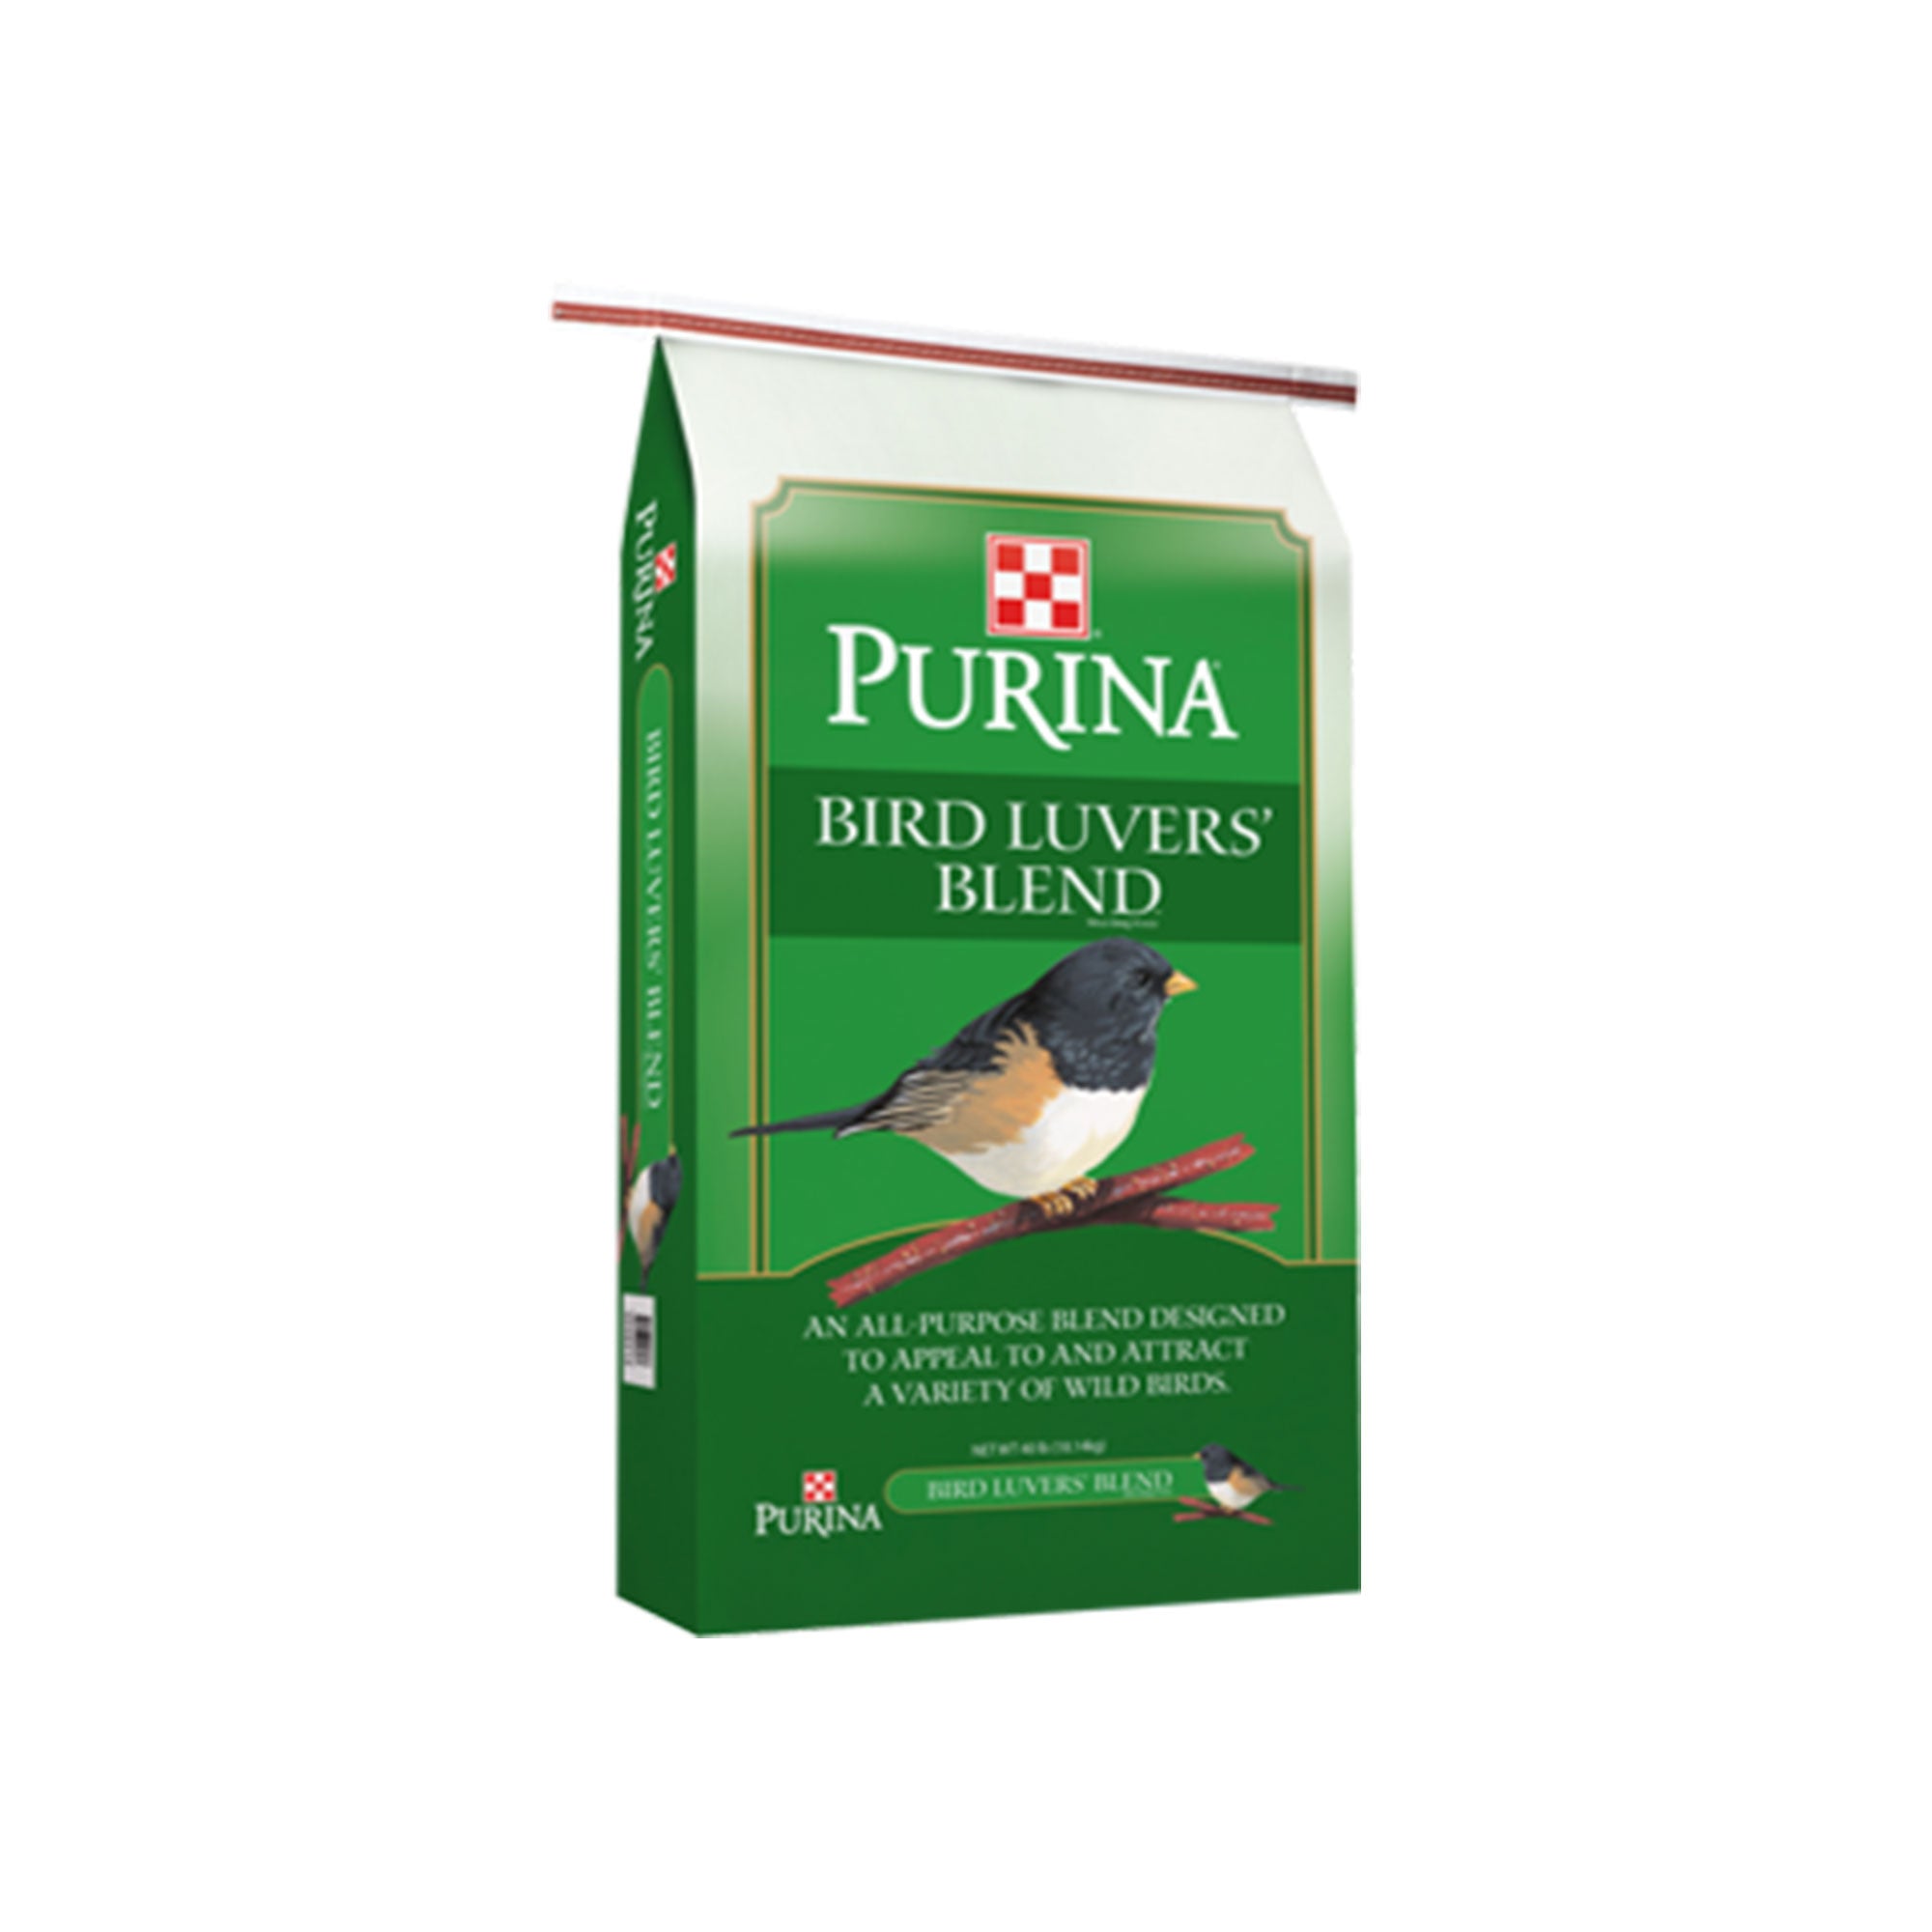 Purina® Bird Luvers' Blend Wild Bird Seed